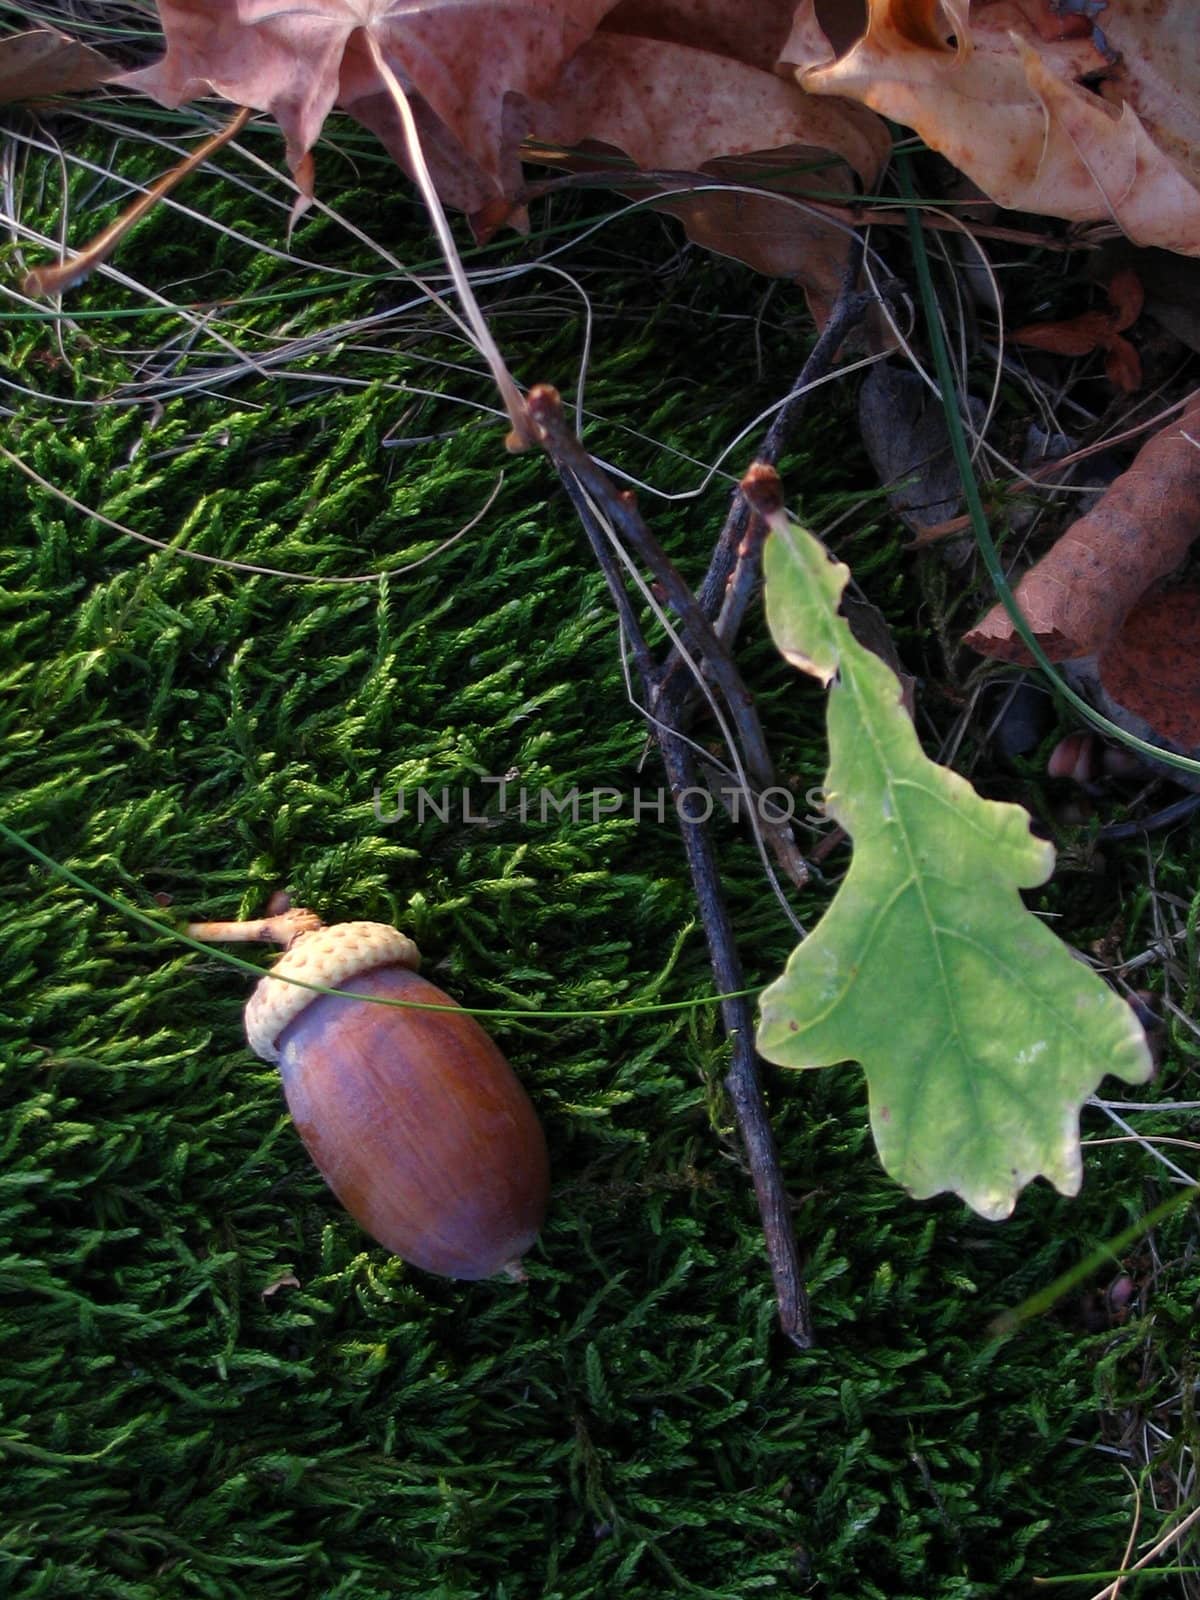 Acorn and leaf of the oak